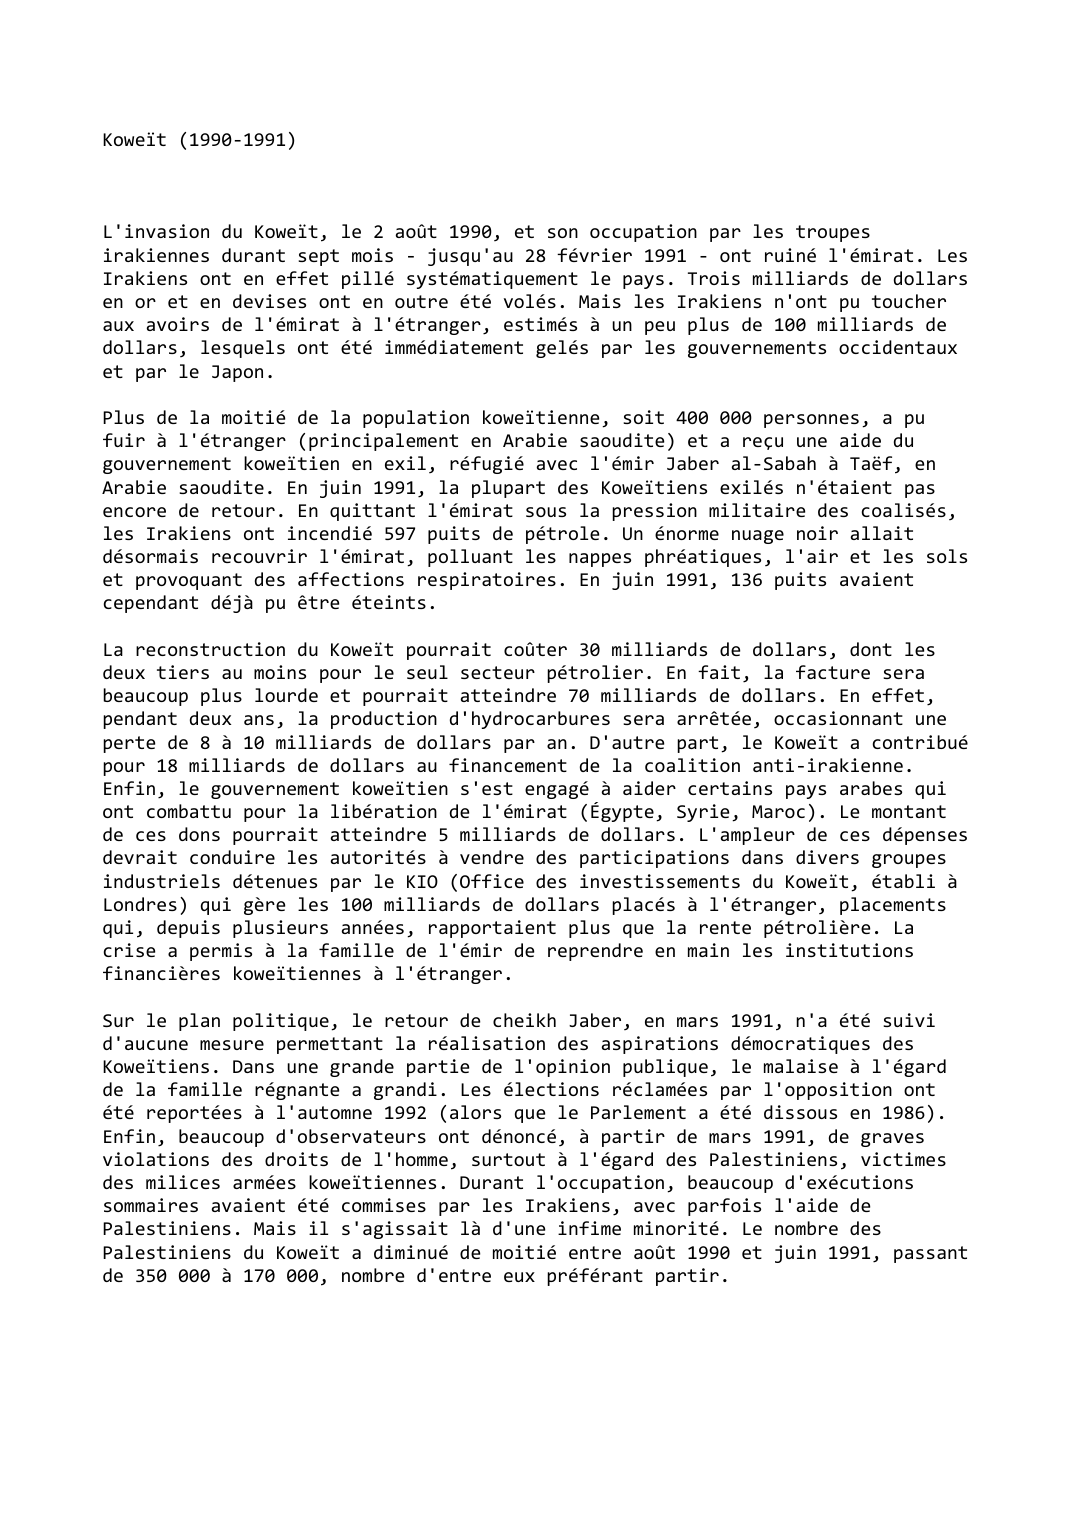 Prévisualisation du document Koweït (1990-1991)